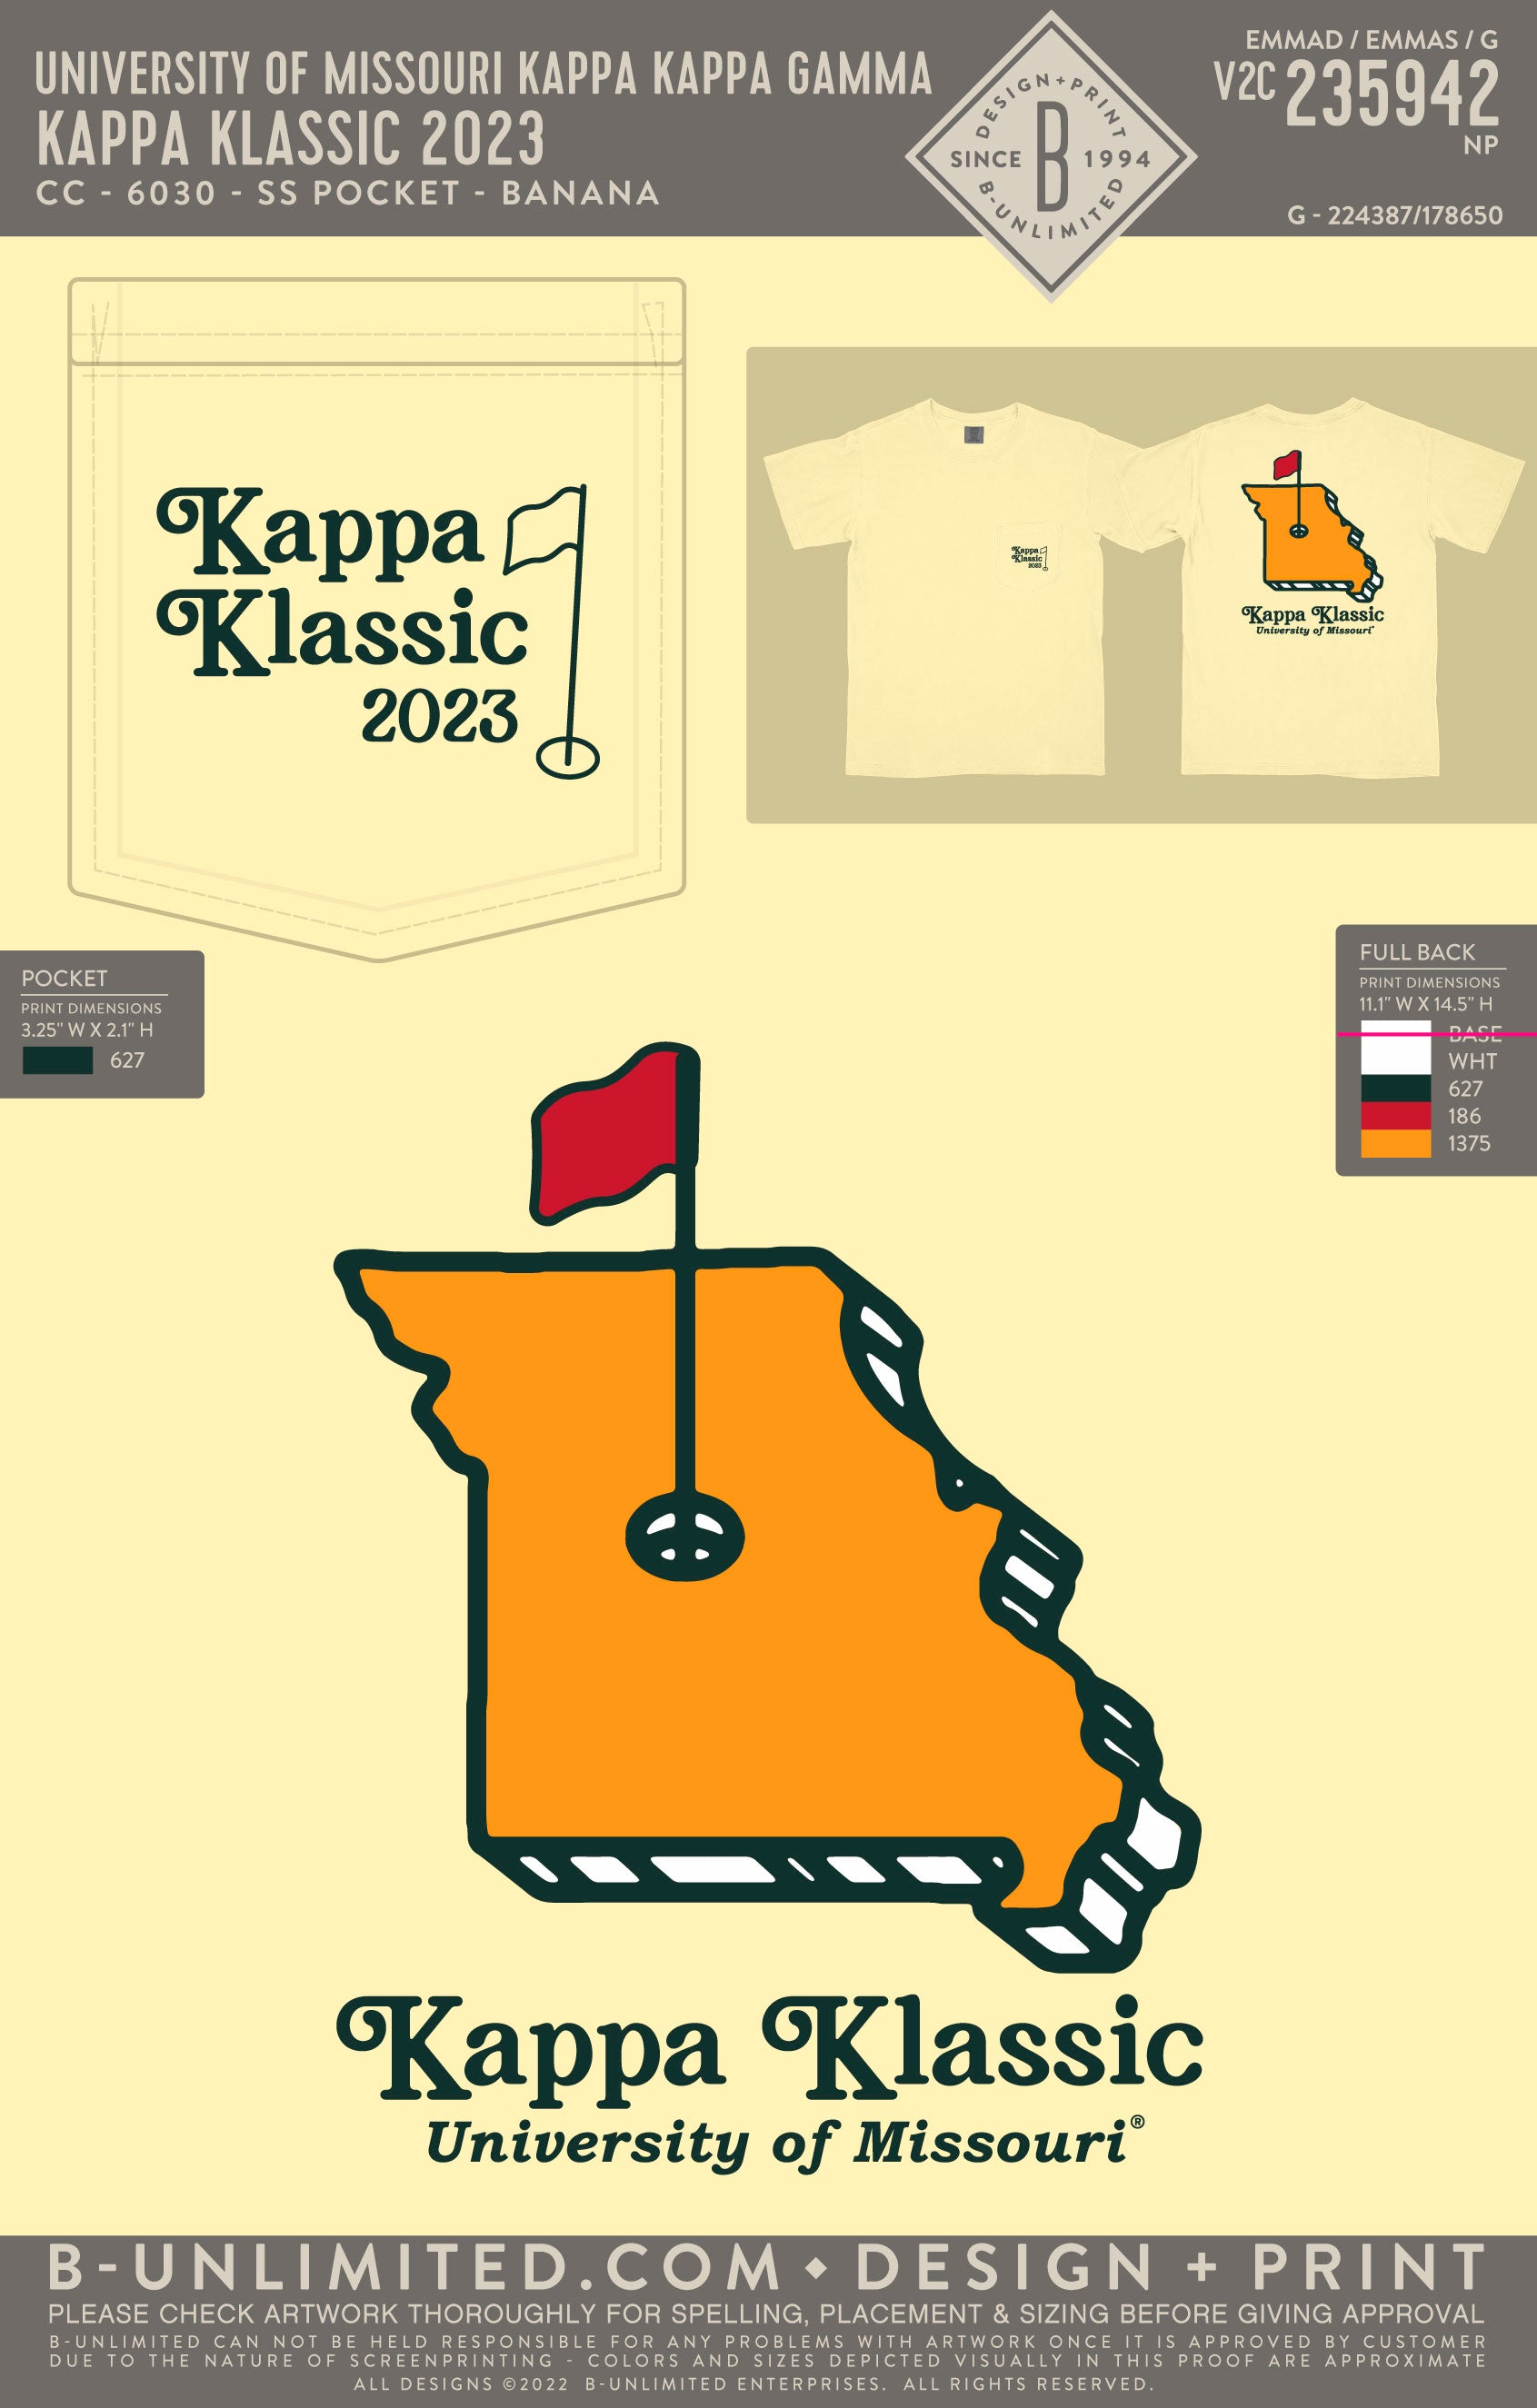 University of Missouri Kappa Kappa Gamma - Kappa Klassic 2023 - CC - 6030 - SS Pocket - Banana